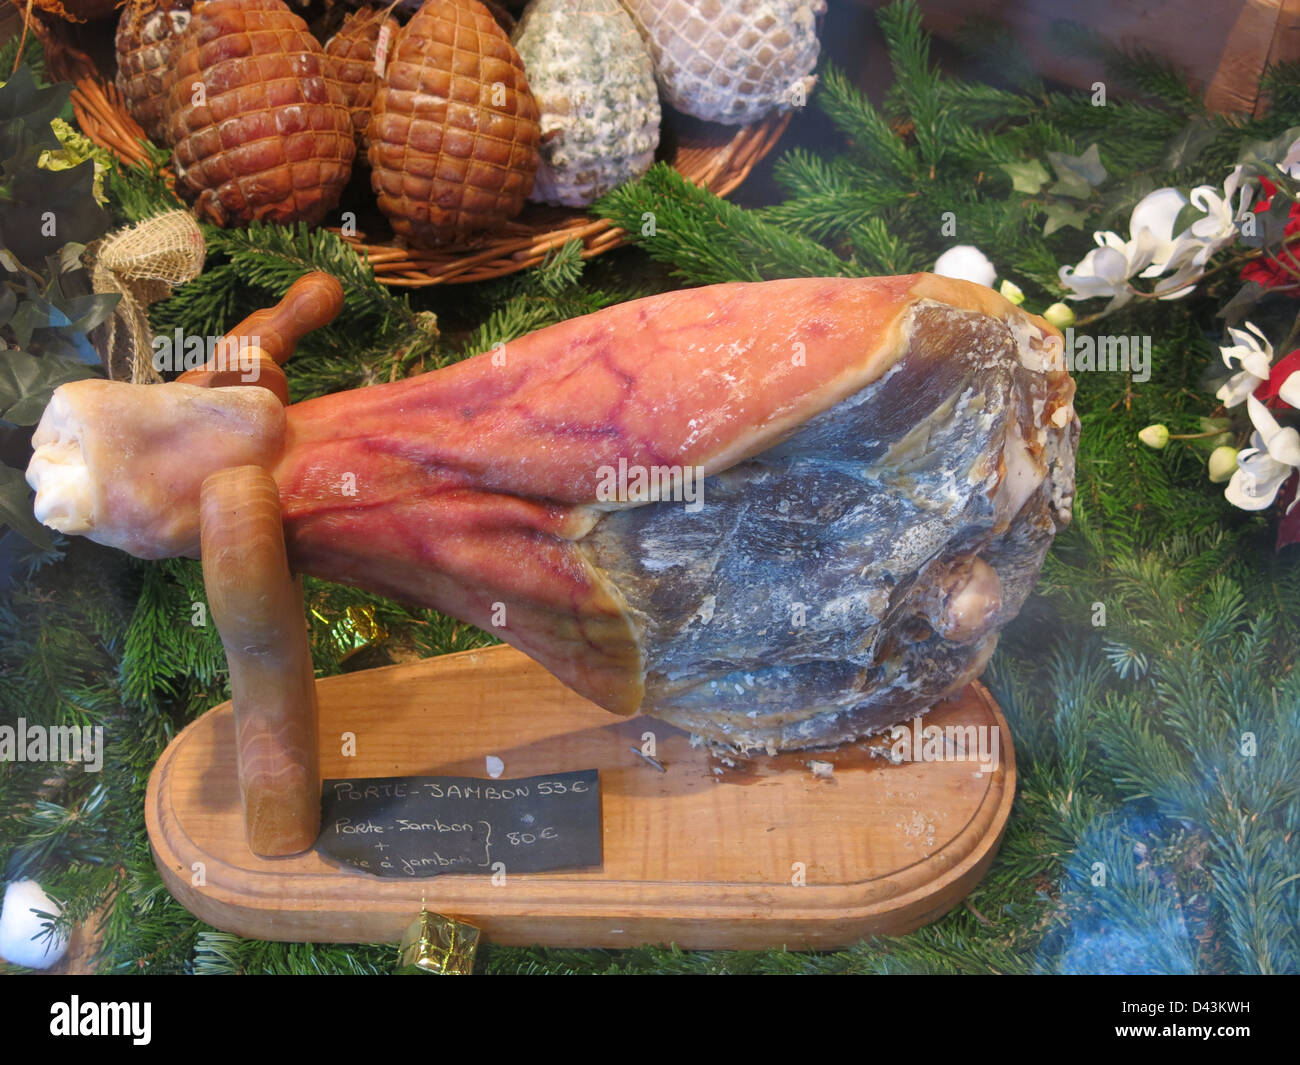 Ham, Jambon in Chamonix, France. Stock Photo